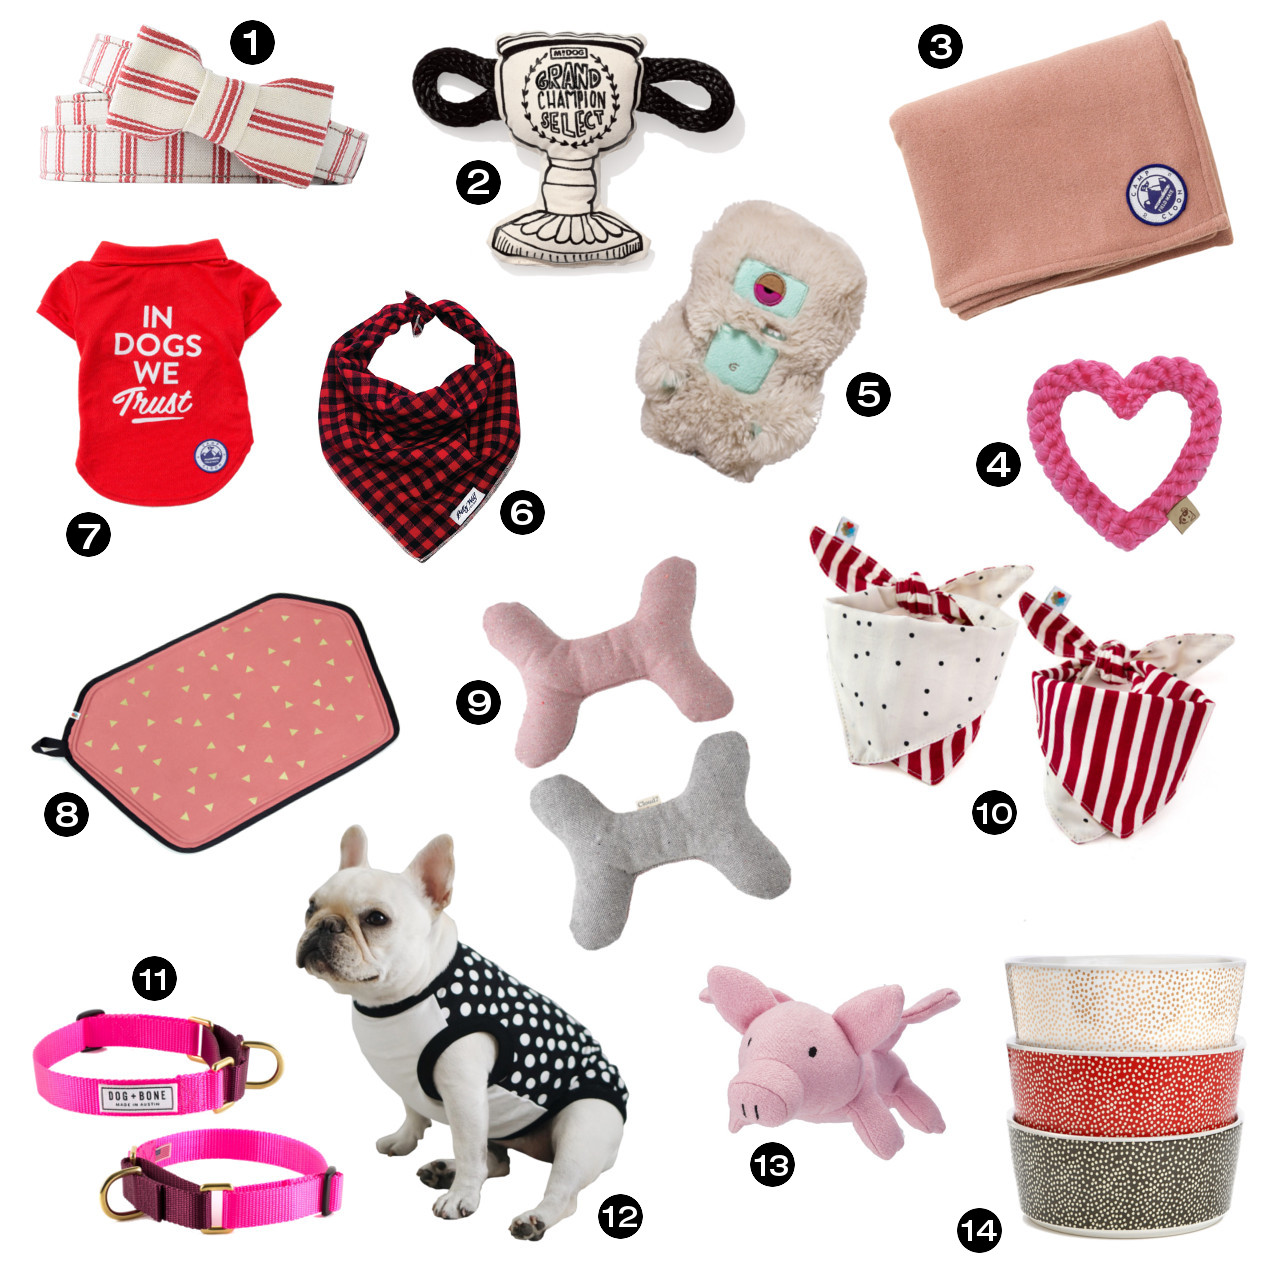 https://design-milk.com/images/2019/10/valentines_day_gift_guide_for_dogs_01.jpg